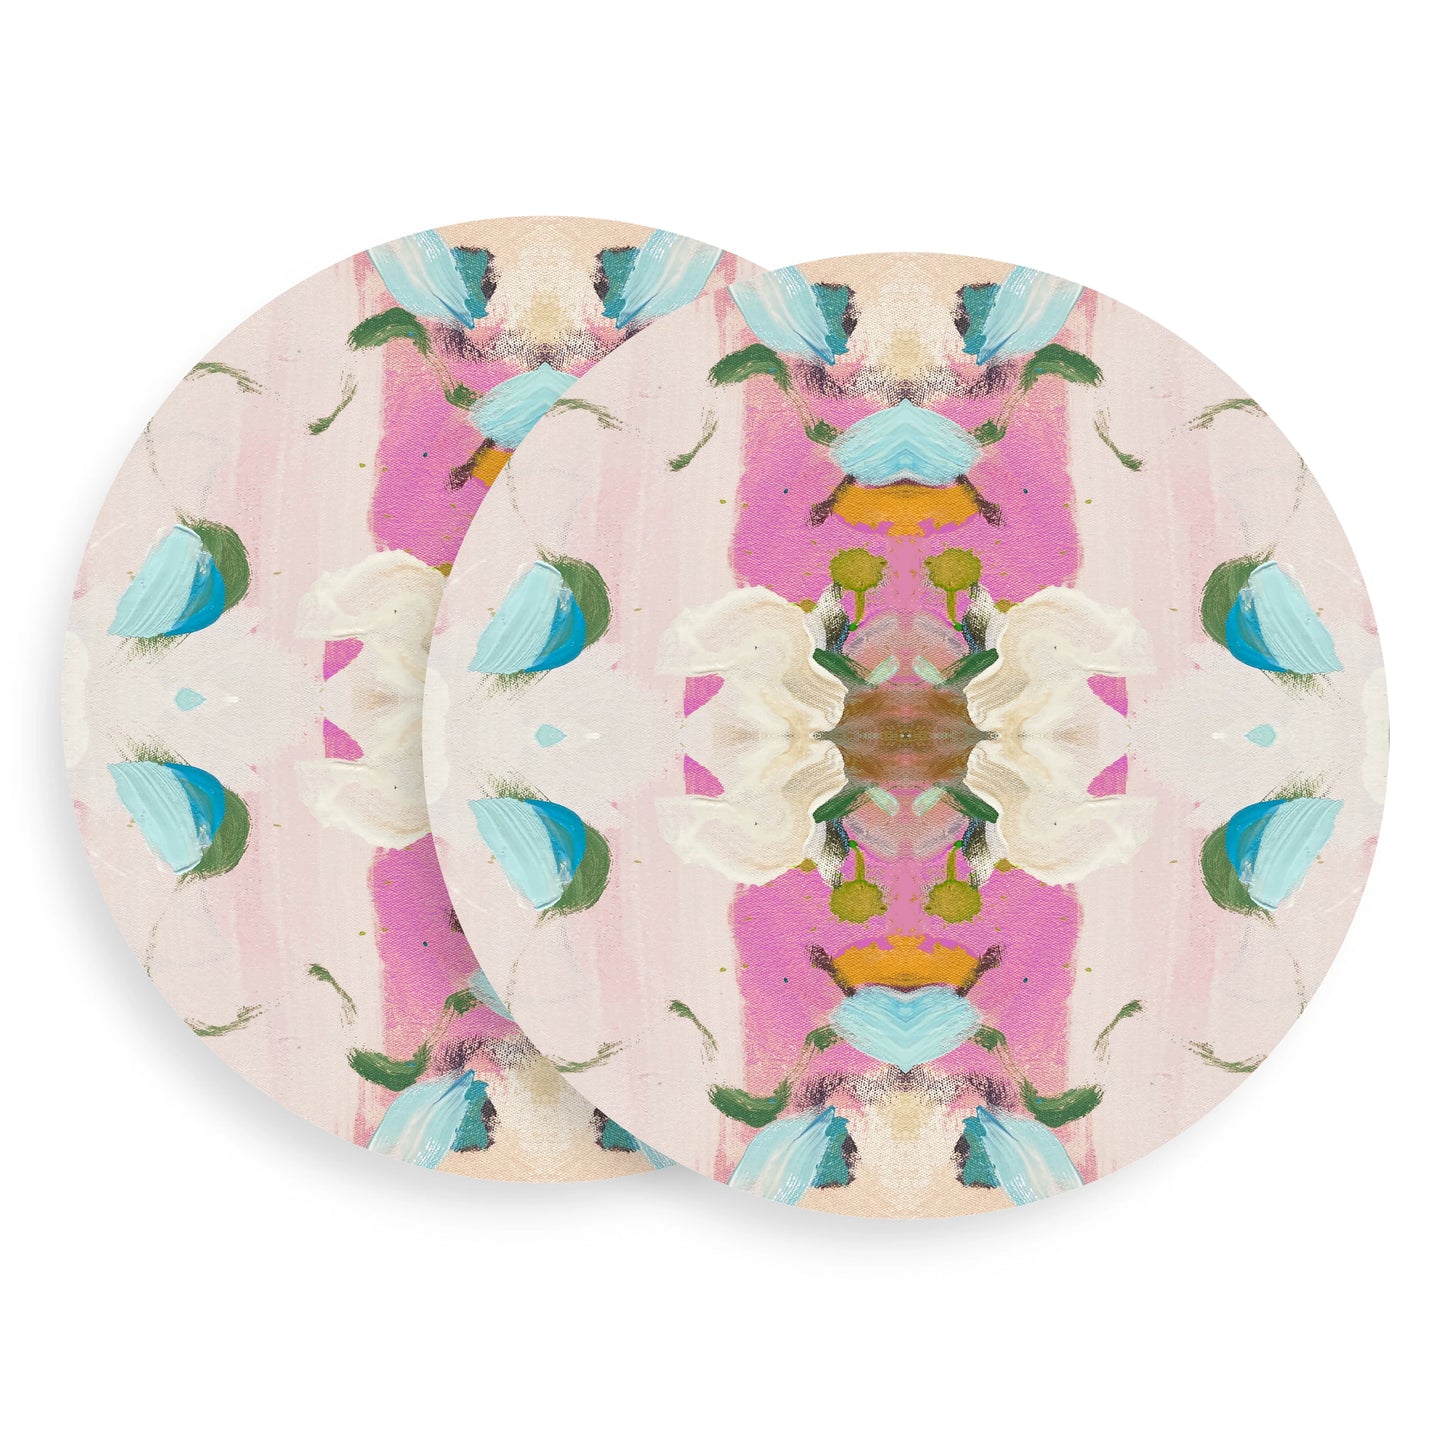 Tart by Taylor x Laura Park Monet's Garden Pink Coaster